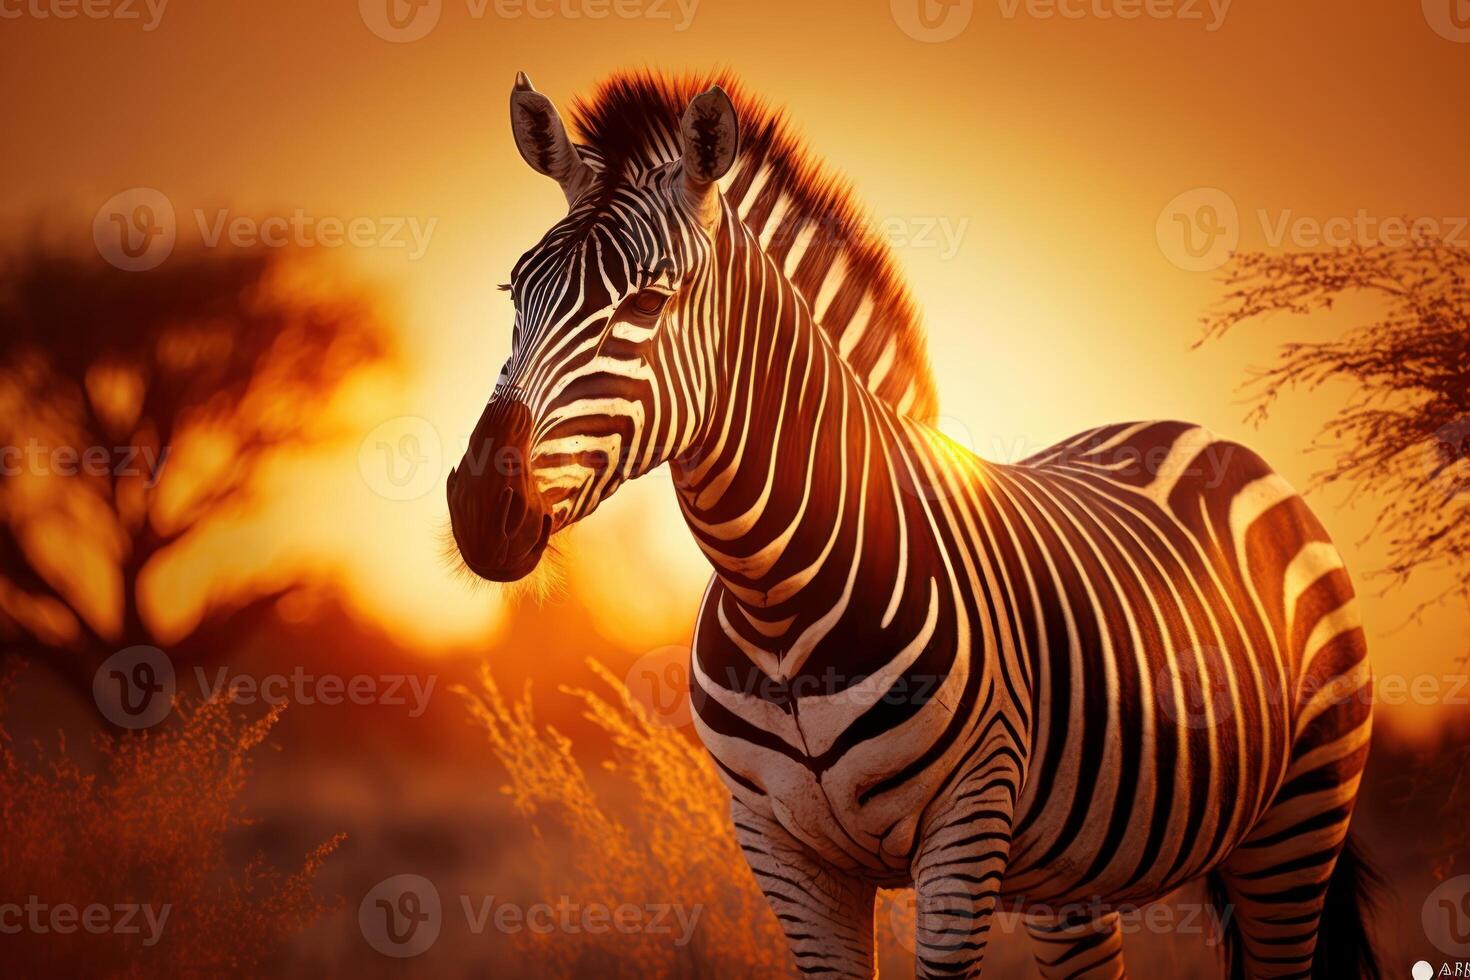 Zebra in savannah African wildlife on sunset background, Africa day. Created photo